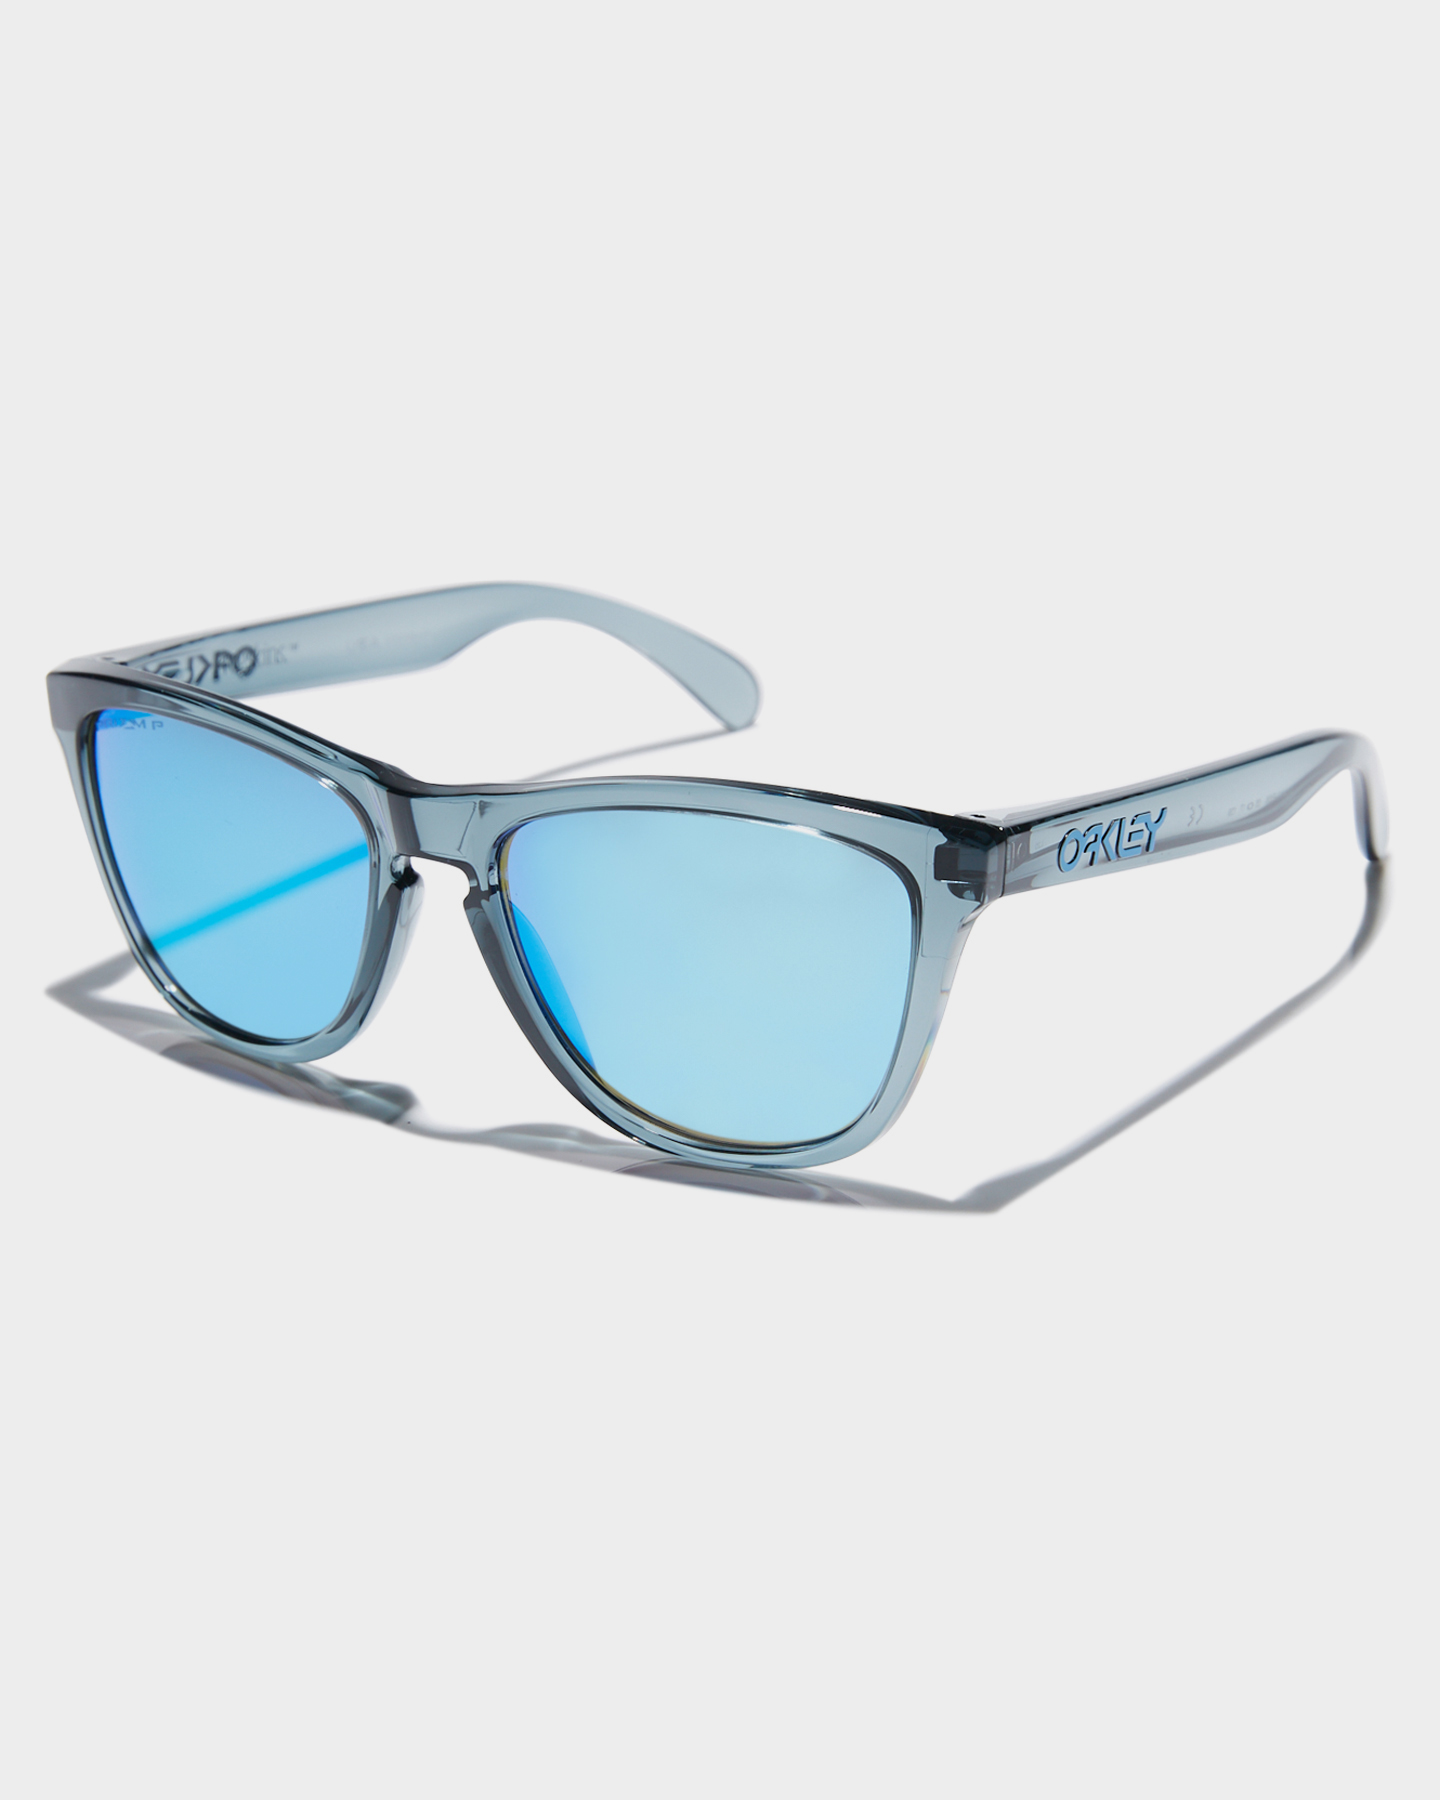 Oakley Frogskins Sunglasses - Crystal 